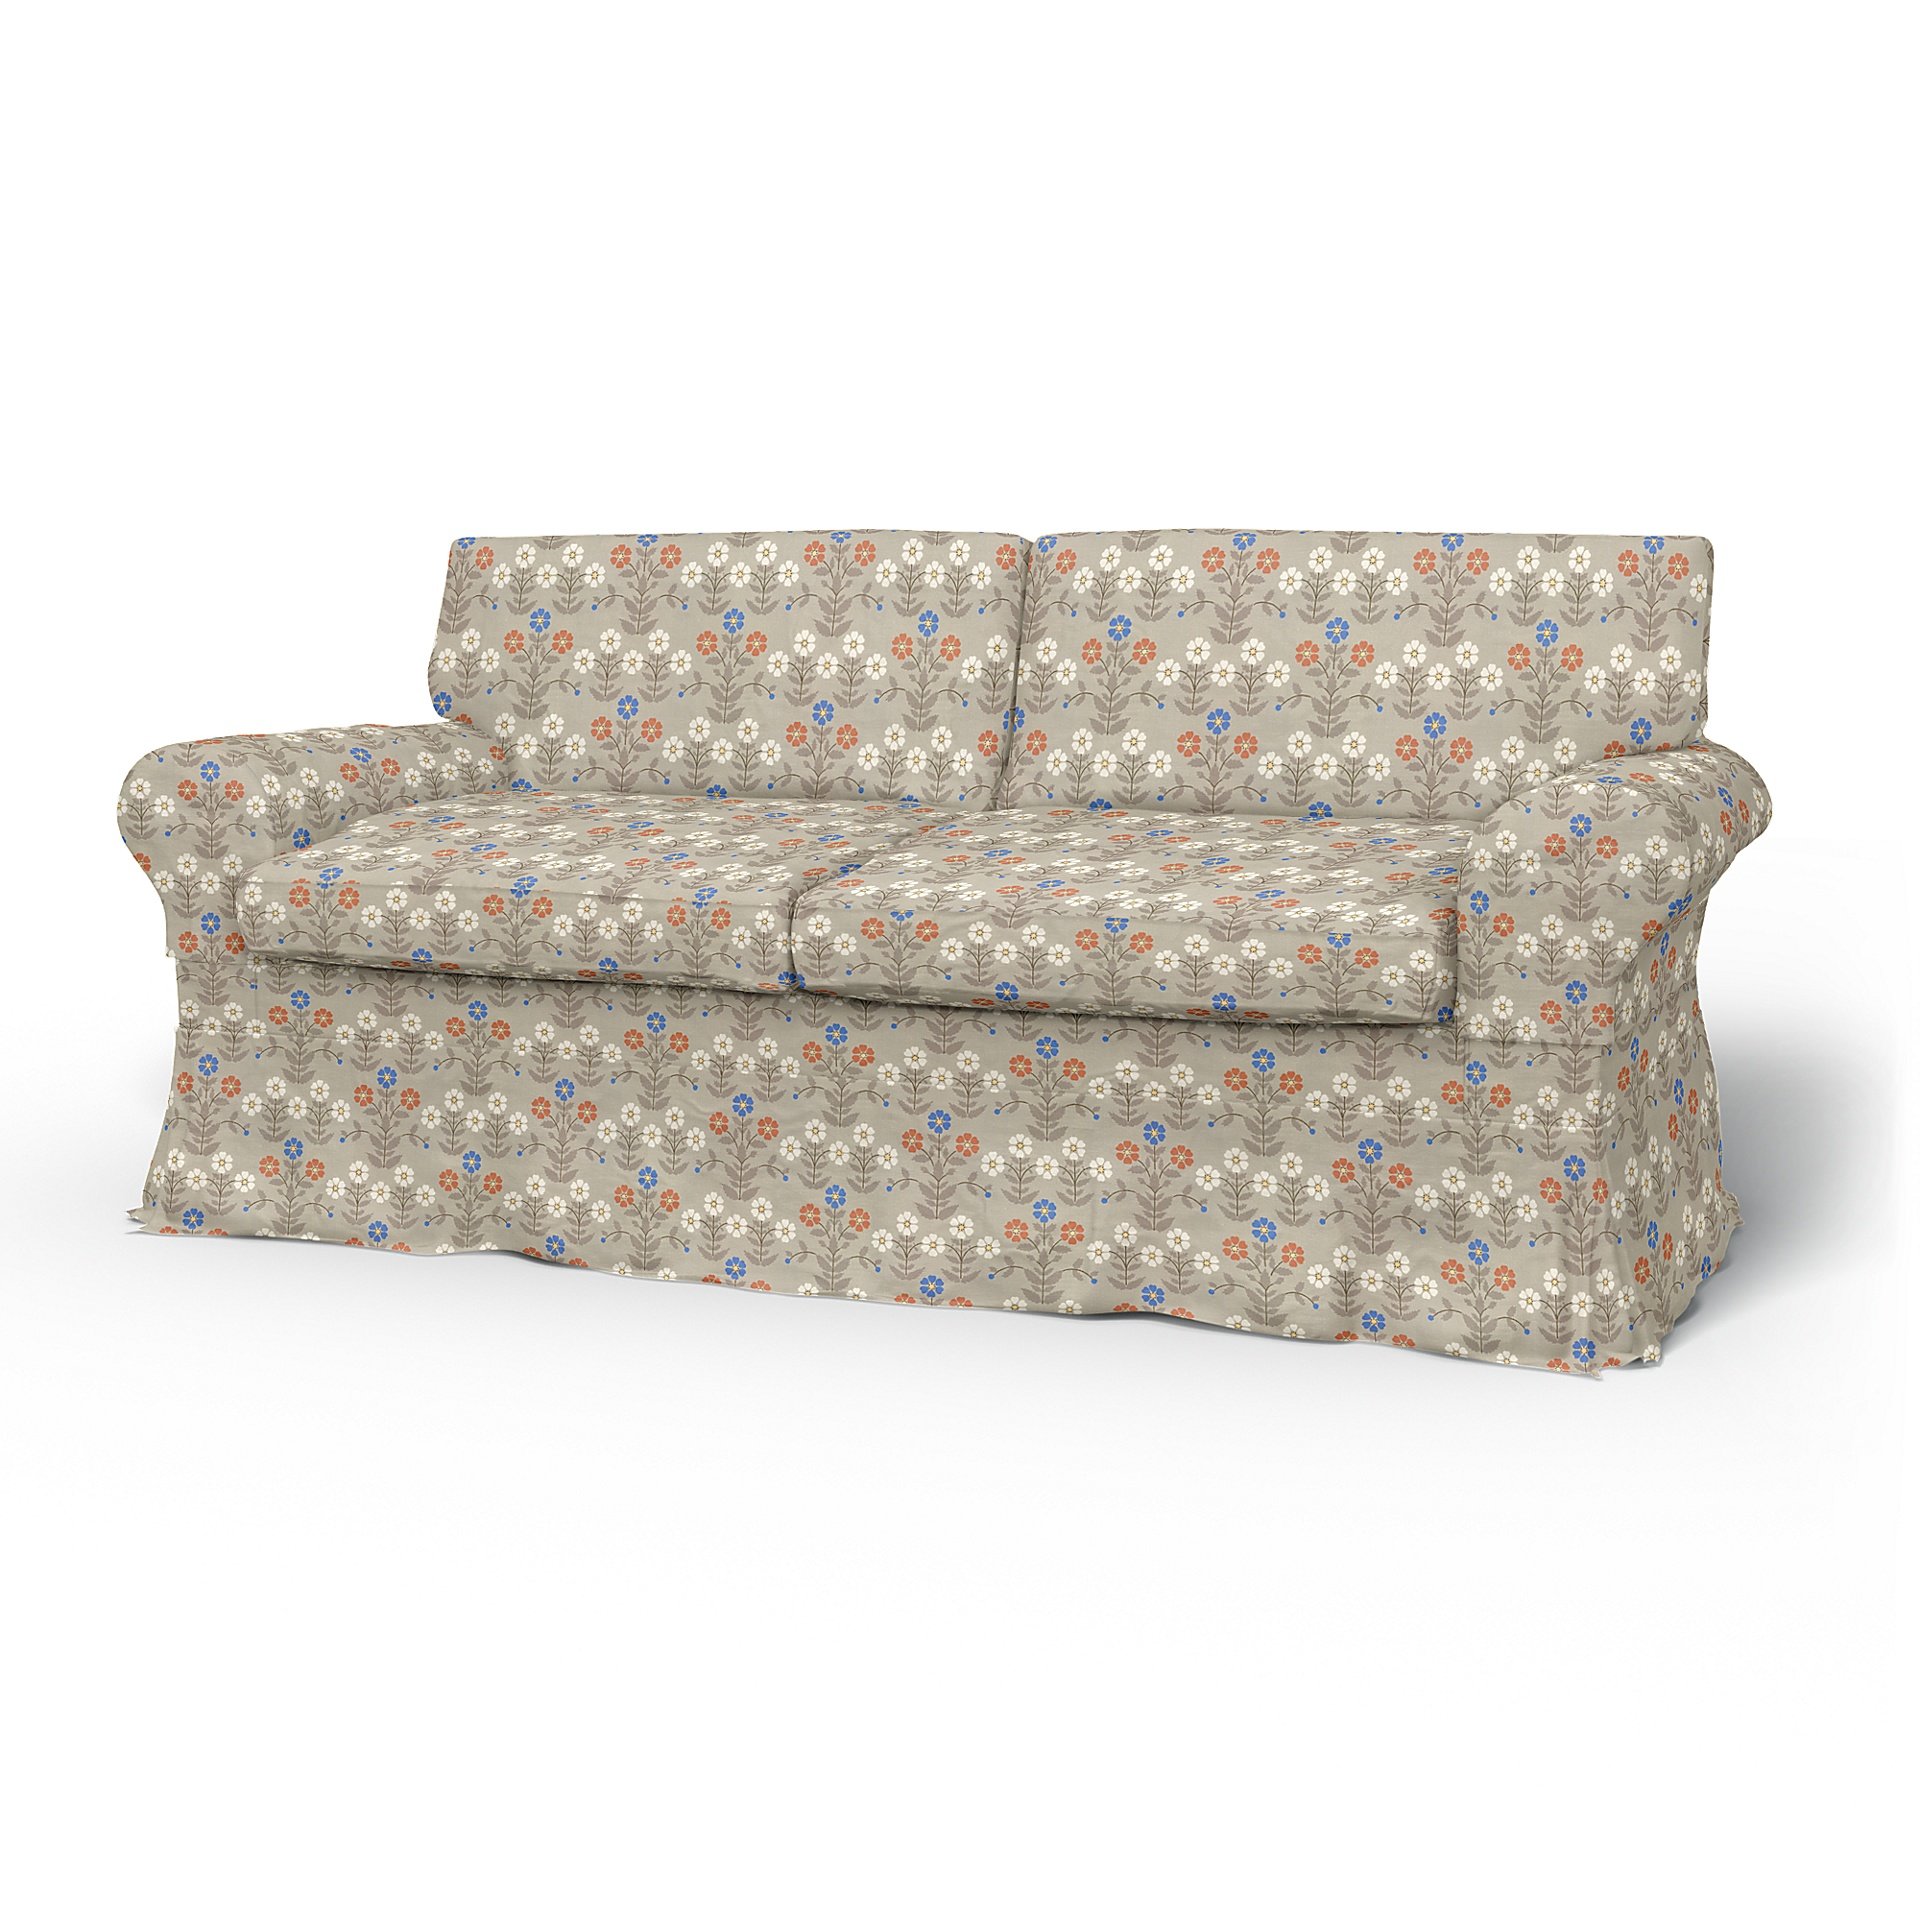 IKEA - Ektorp 2 Seater Sofa Bed Cover, Sippor Blue/Orange, BEMZ x BORASTAPETER COLLECTION - Bemz